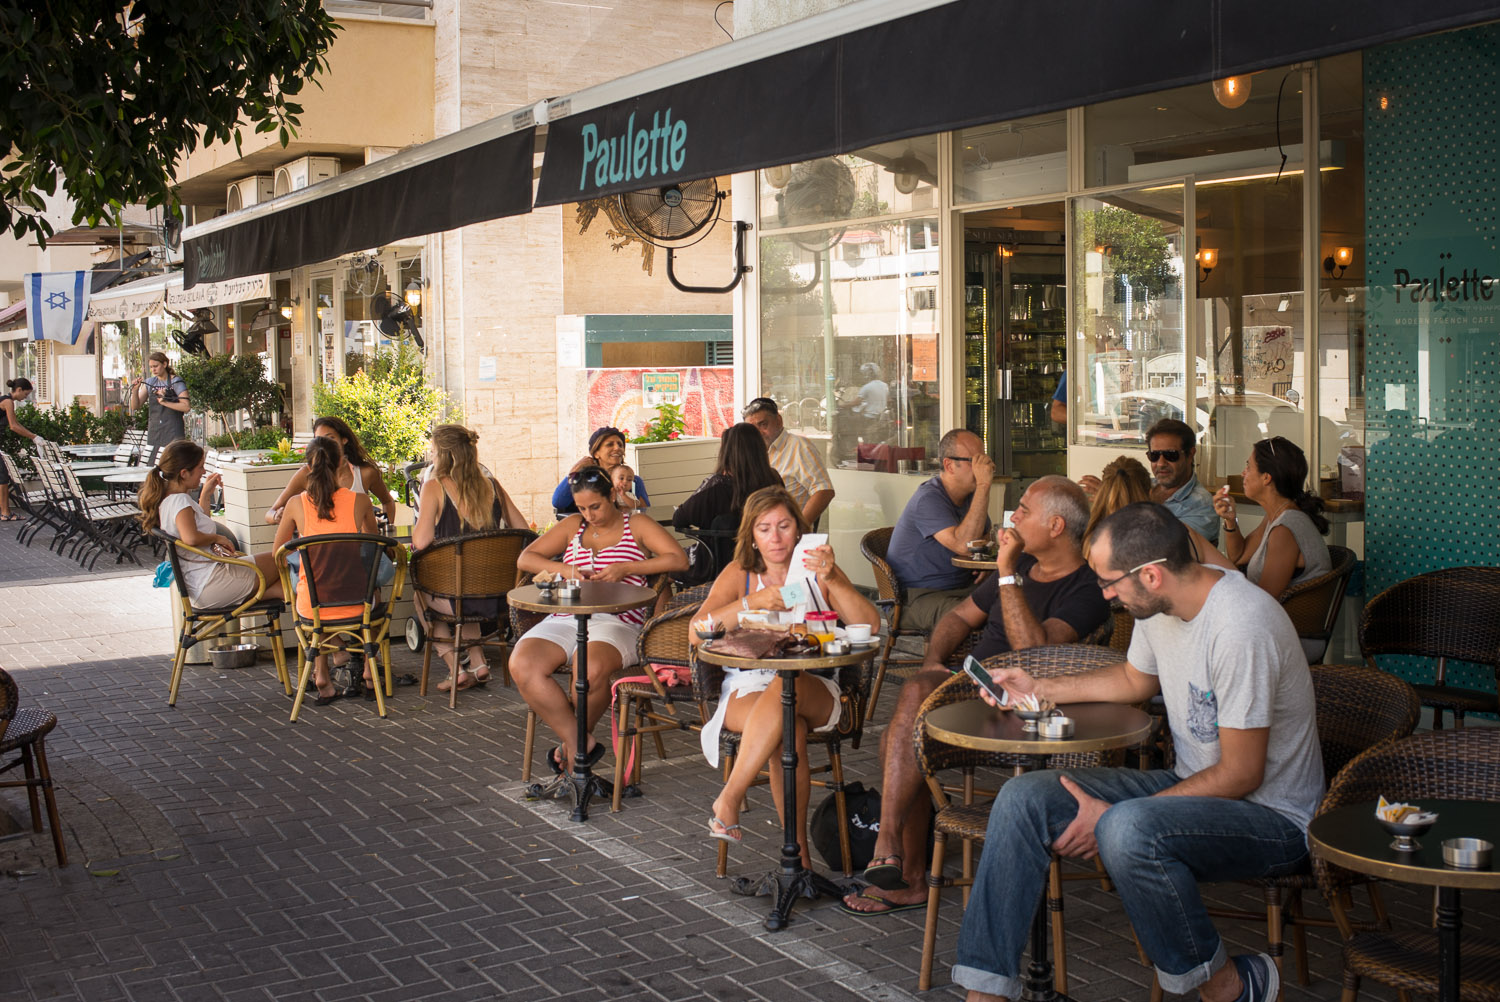  TEL AVIV, ISRAEL - AUGUST 26, 2016: French Café Paulette opened in May 2016 